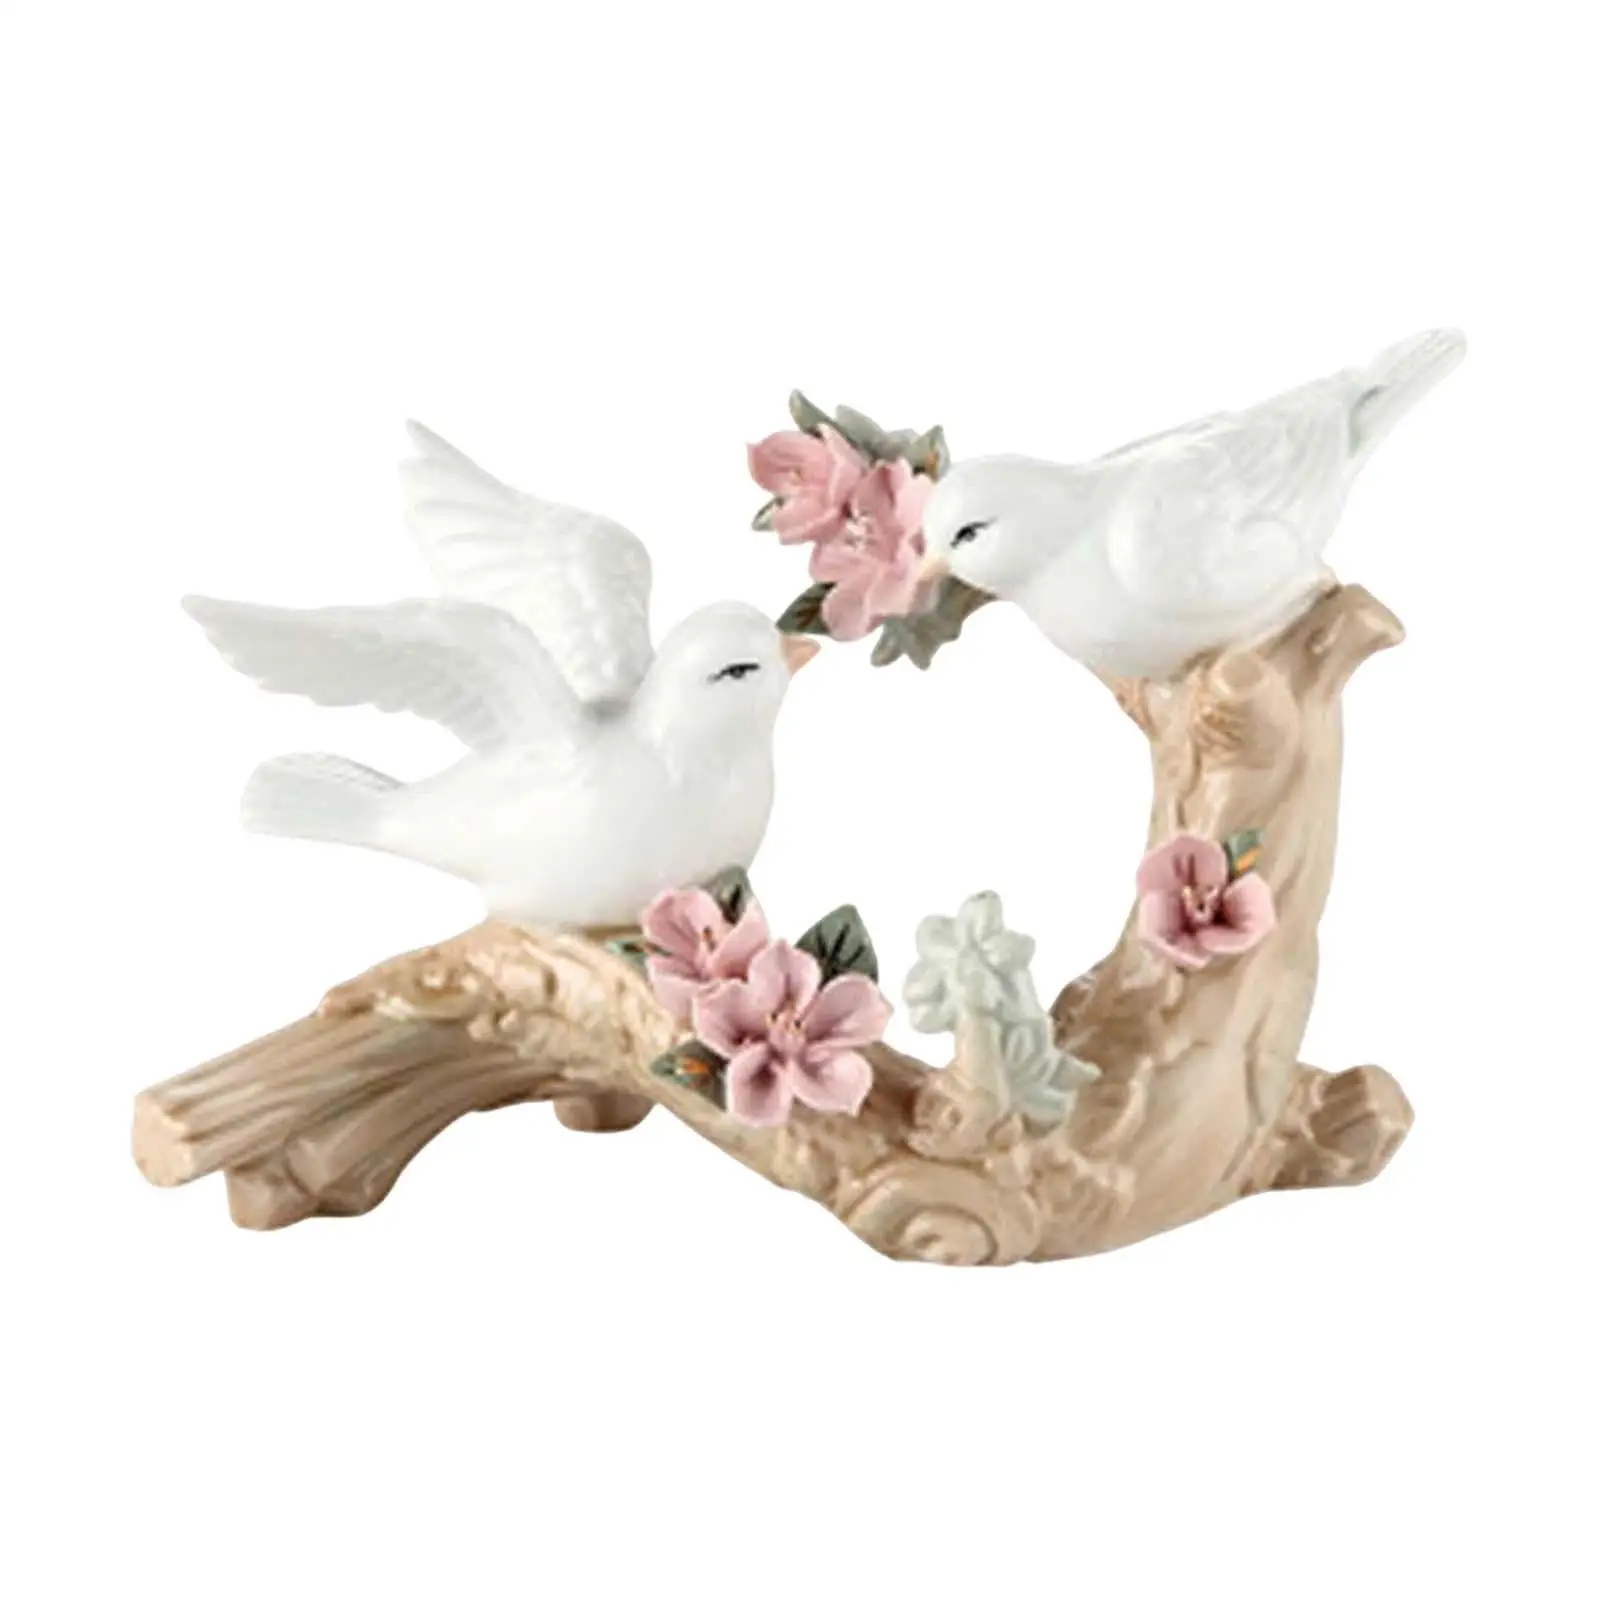 Lifelike Bird Statue Collection Crafts Art Display Ceramic Modern Ornaments for Birthday Gift Bedroom Indoor Office Romantic